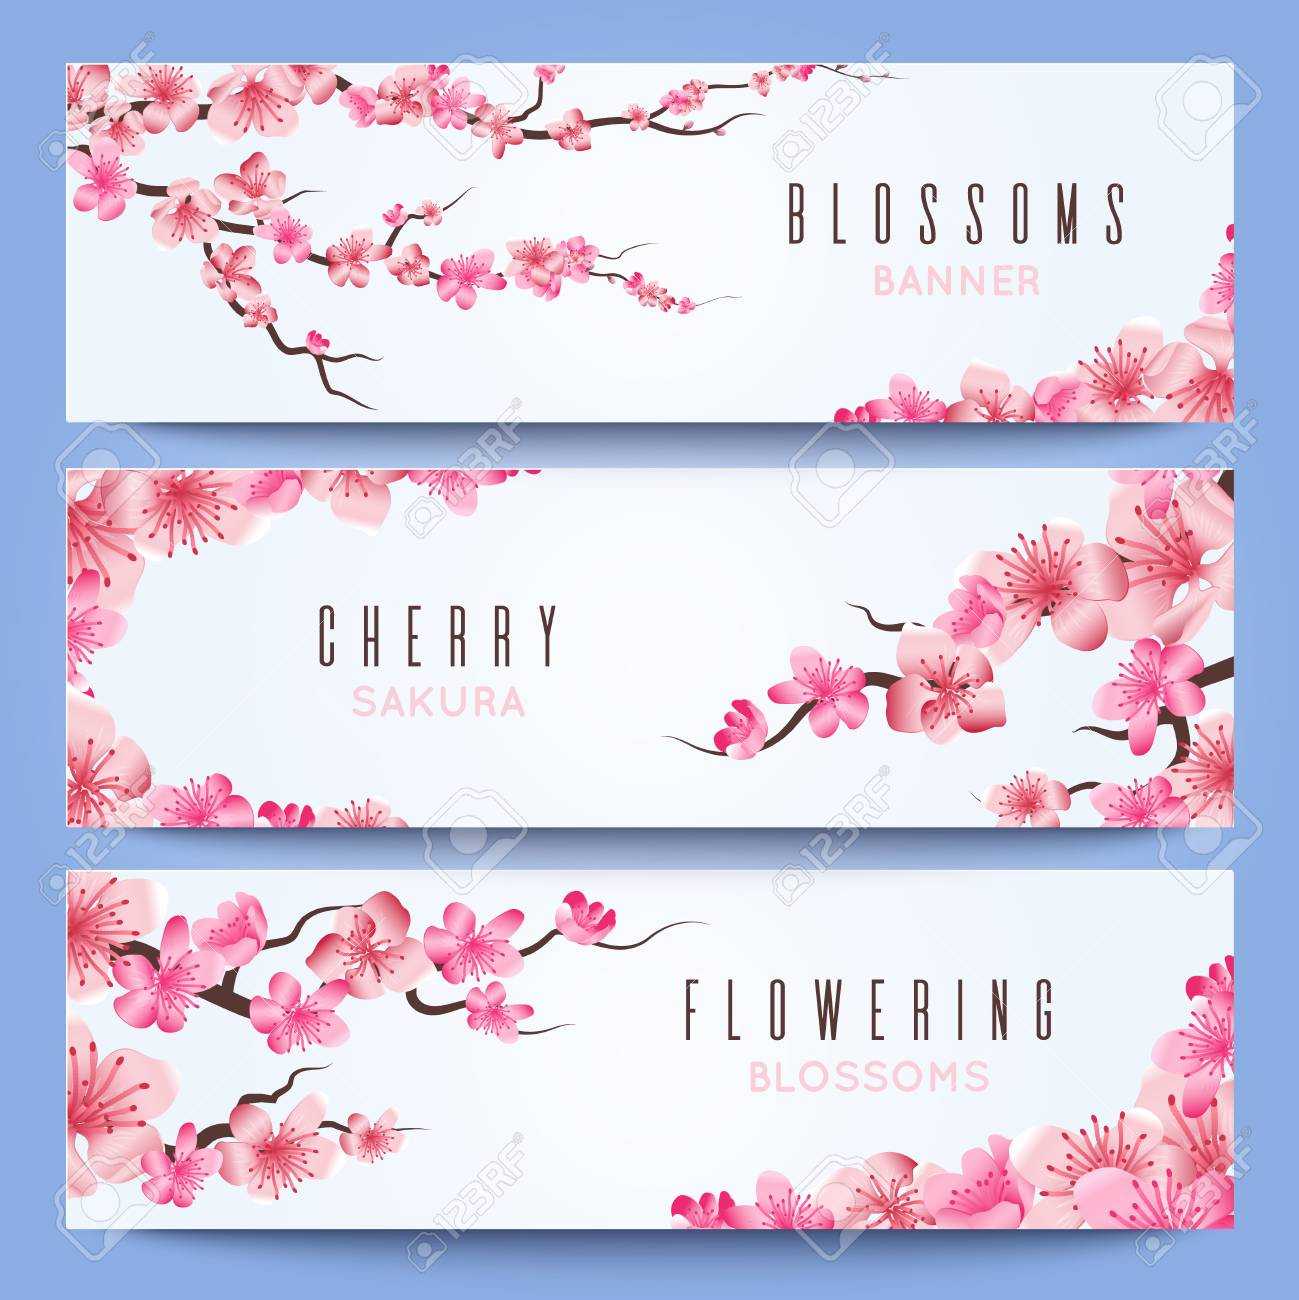 Wedding Banners Template With Spring Japan Sakura, Cherry Blossom Regarding Wedding Banner Design Templates